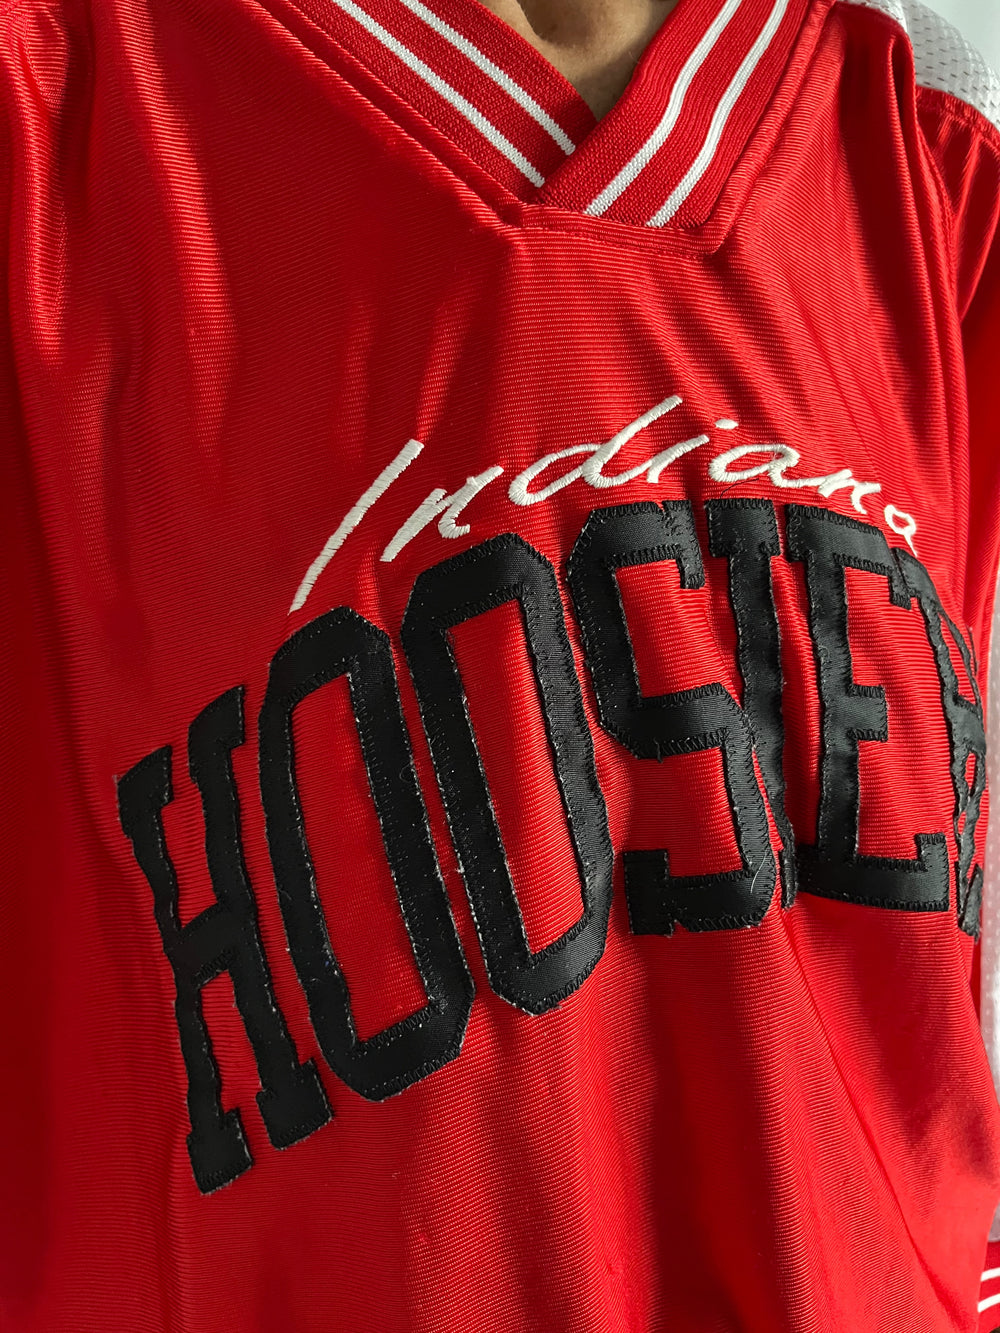 Indianapolis Capitals vintage hockey jersey